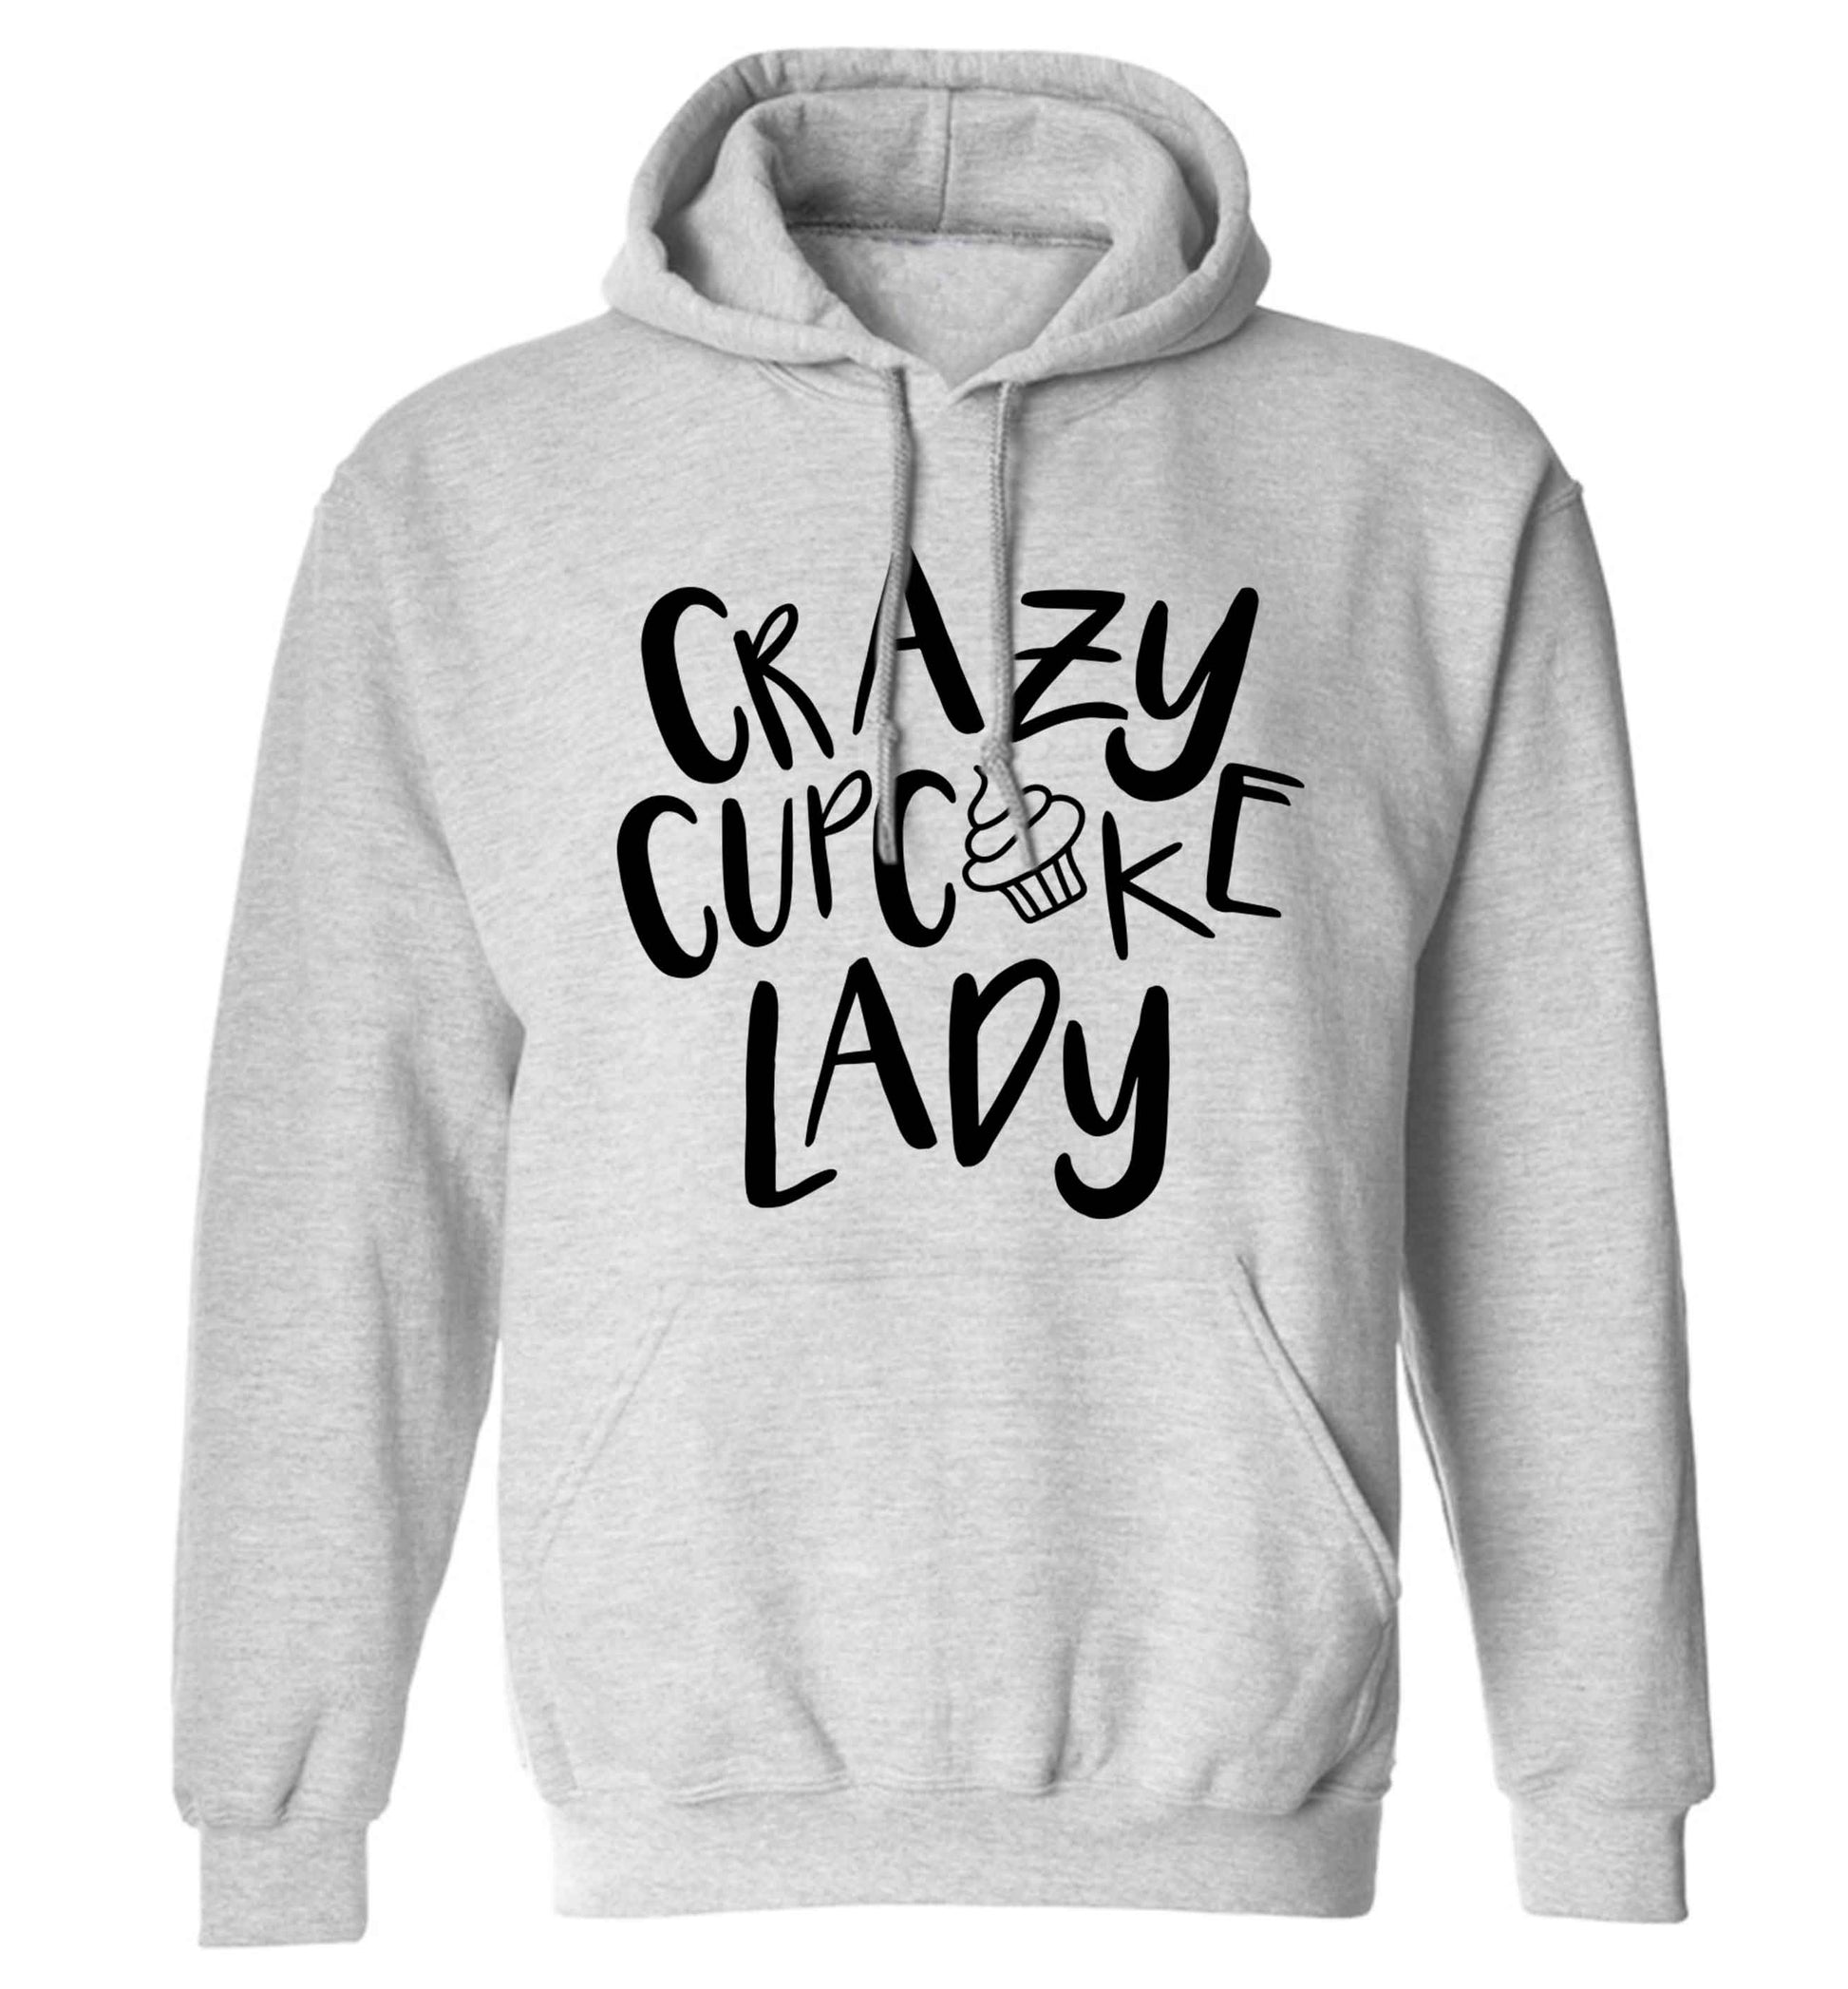 Crazy cupcake lady adults unisex grey hoodie 2XL